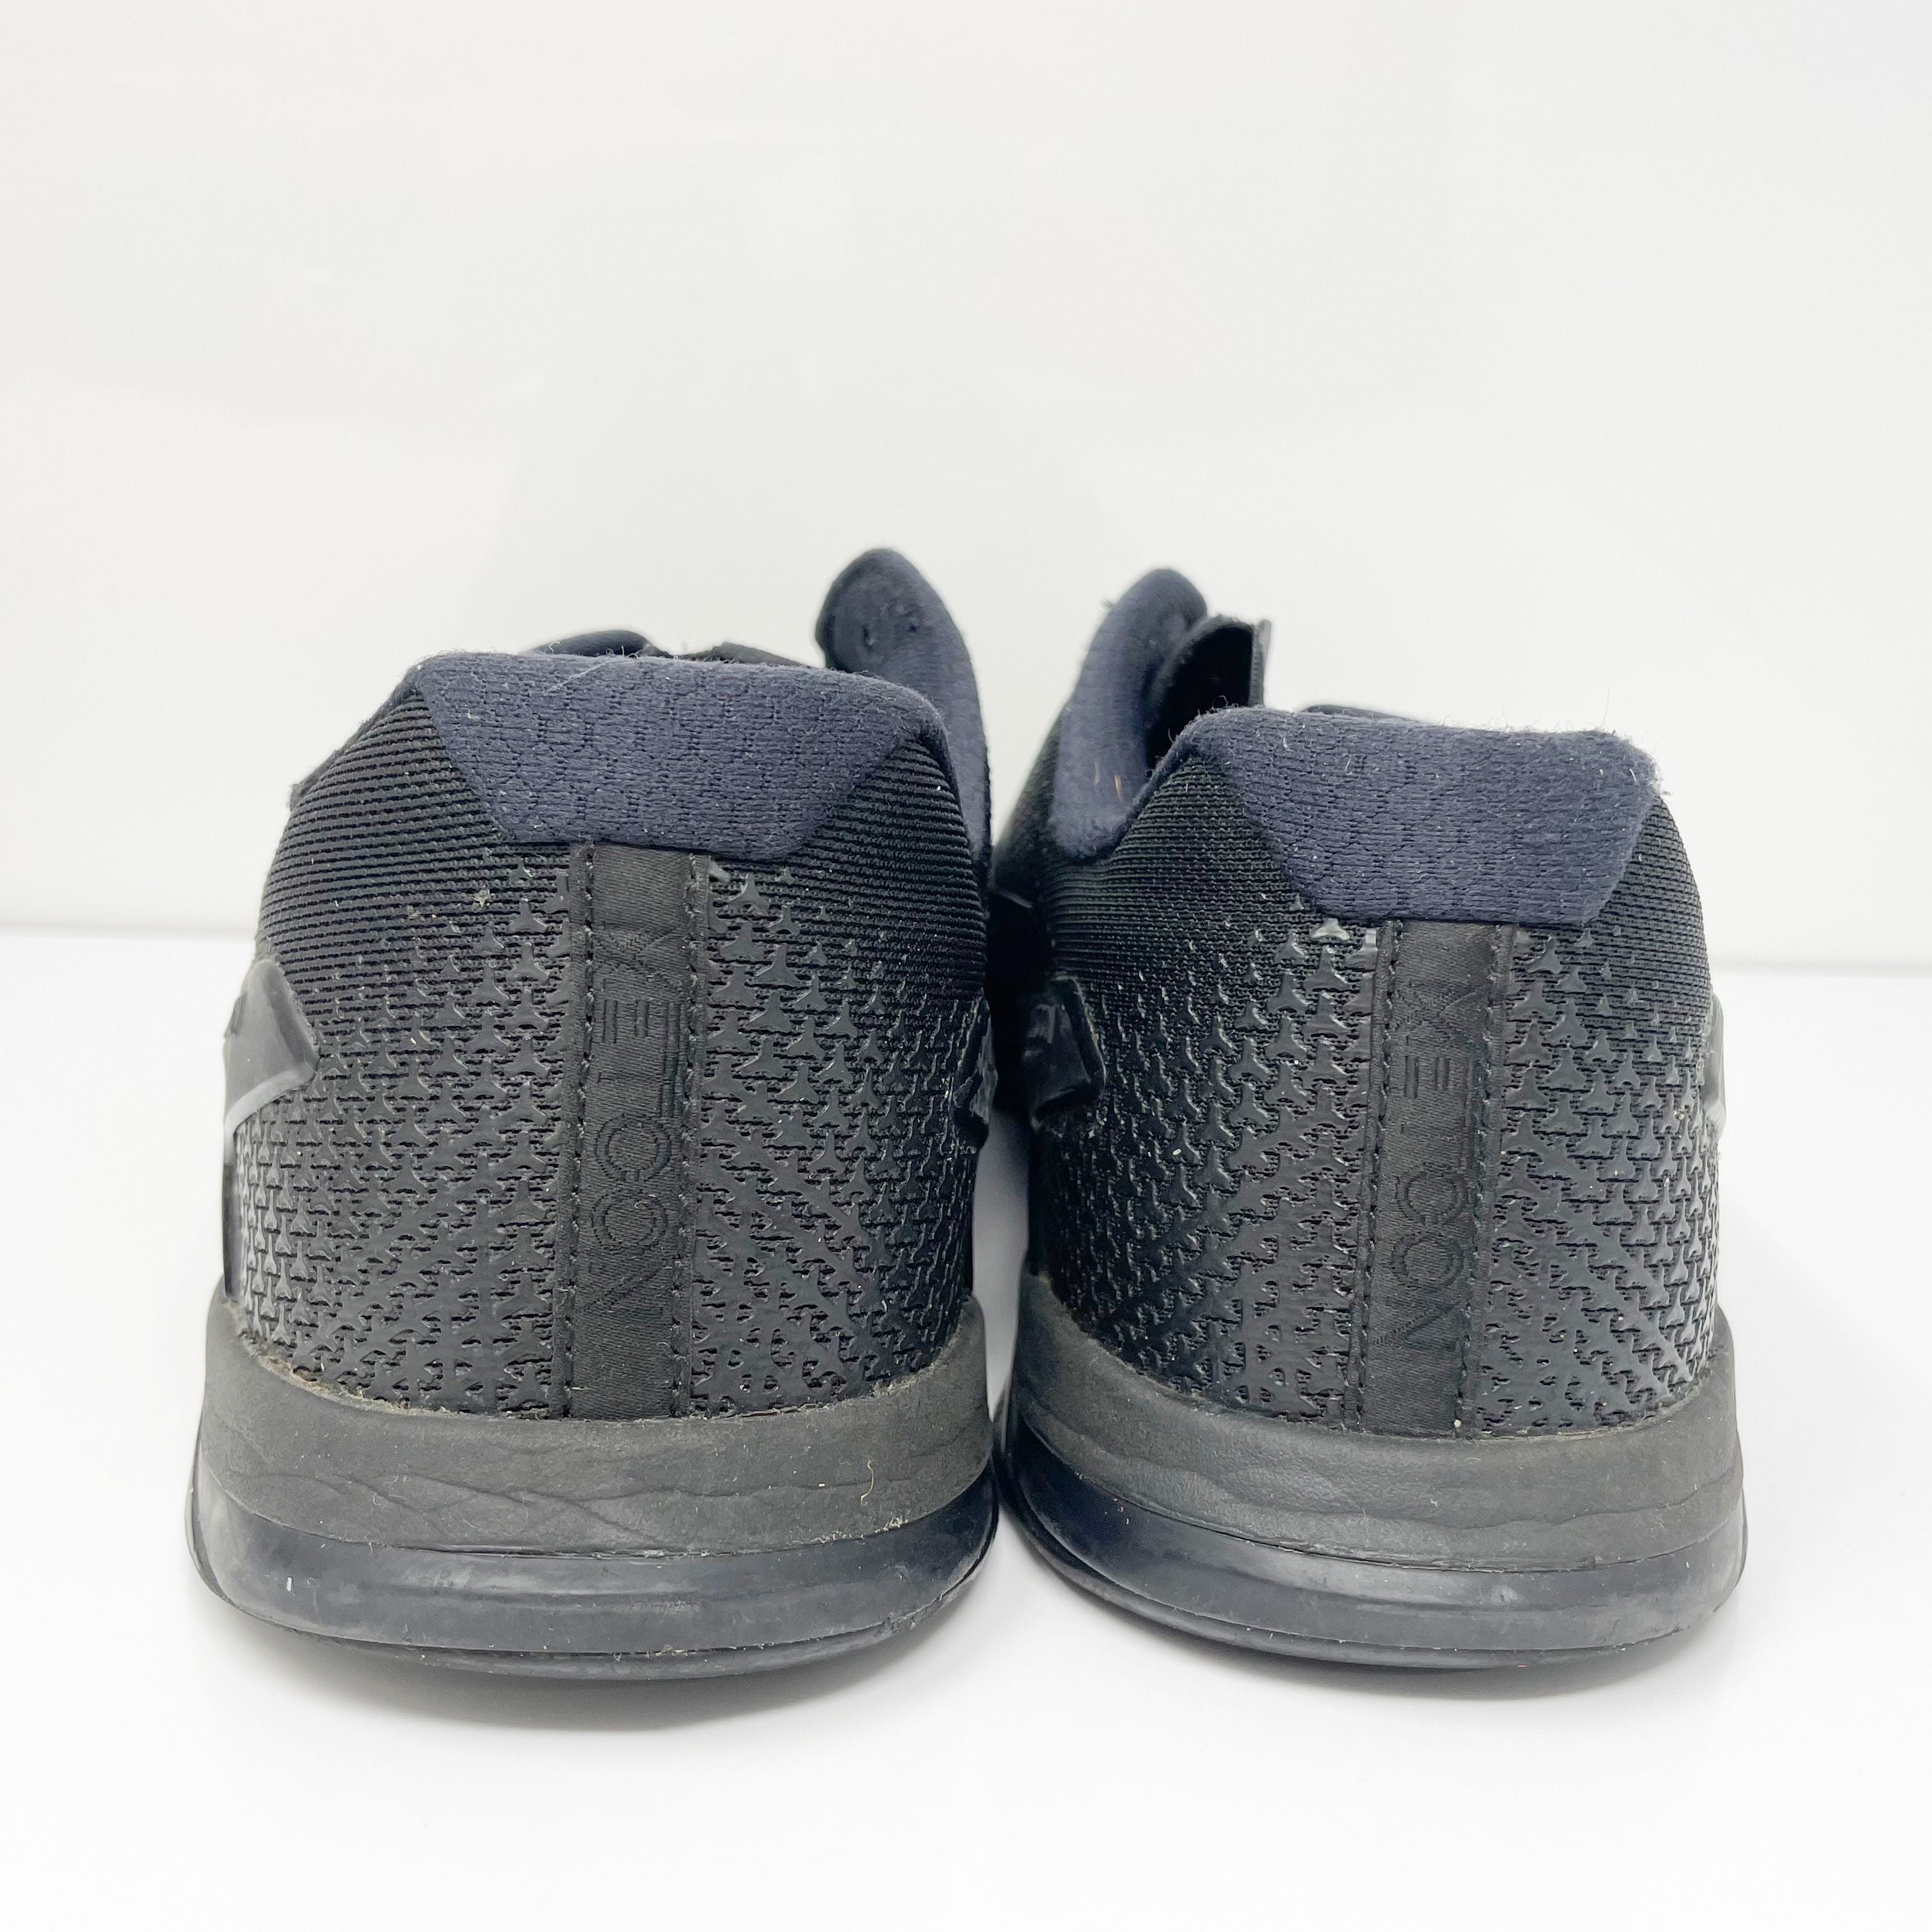 Nike Mens Metcon 4 AH7453-001 Black Running Shoes Sneakers Size 11 ...